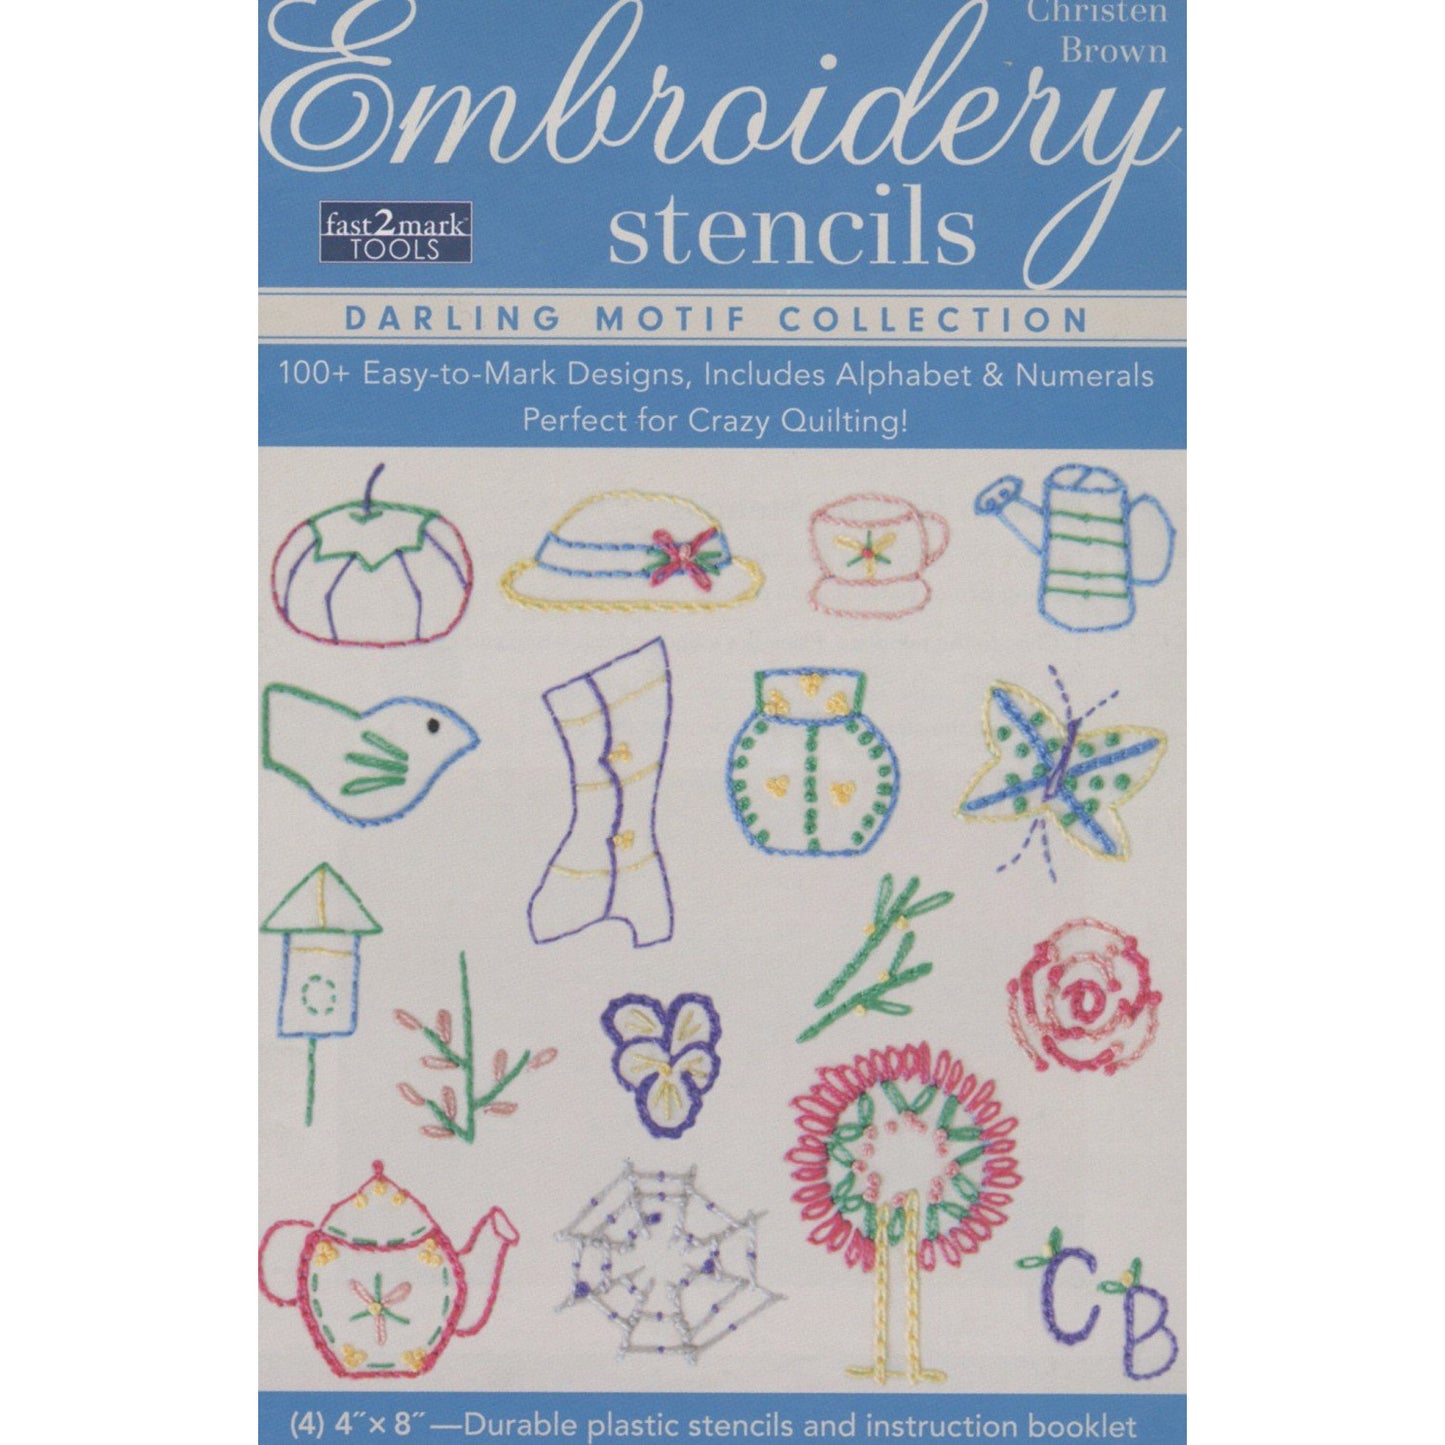 Embroidery Stencils